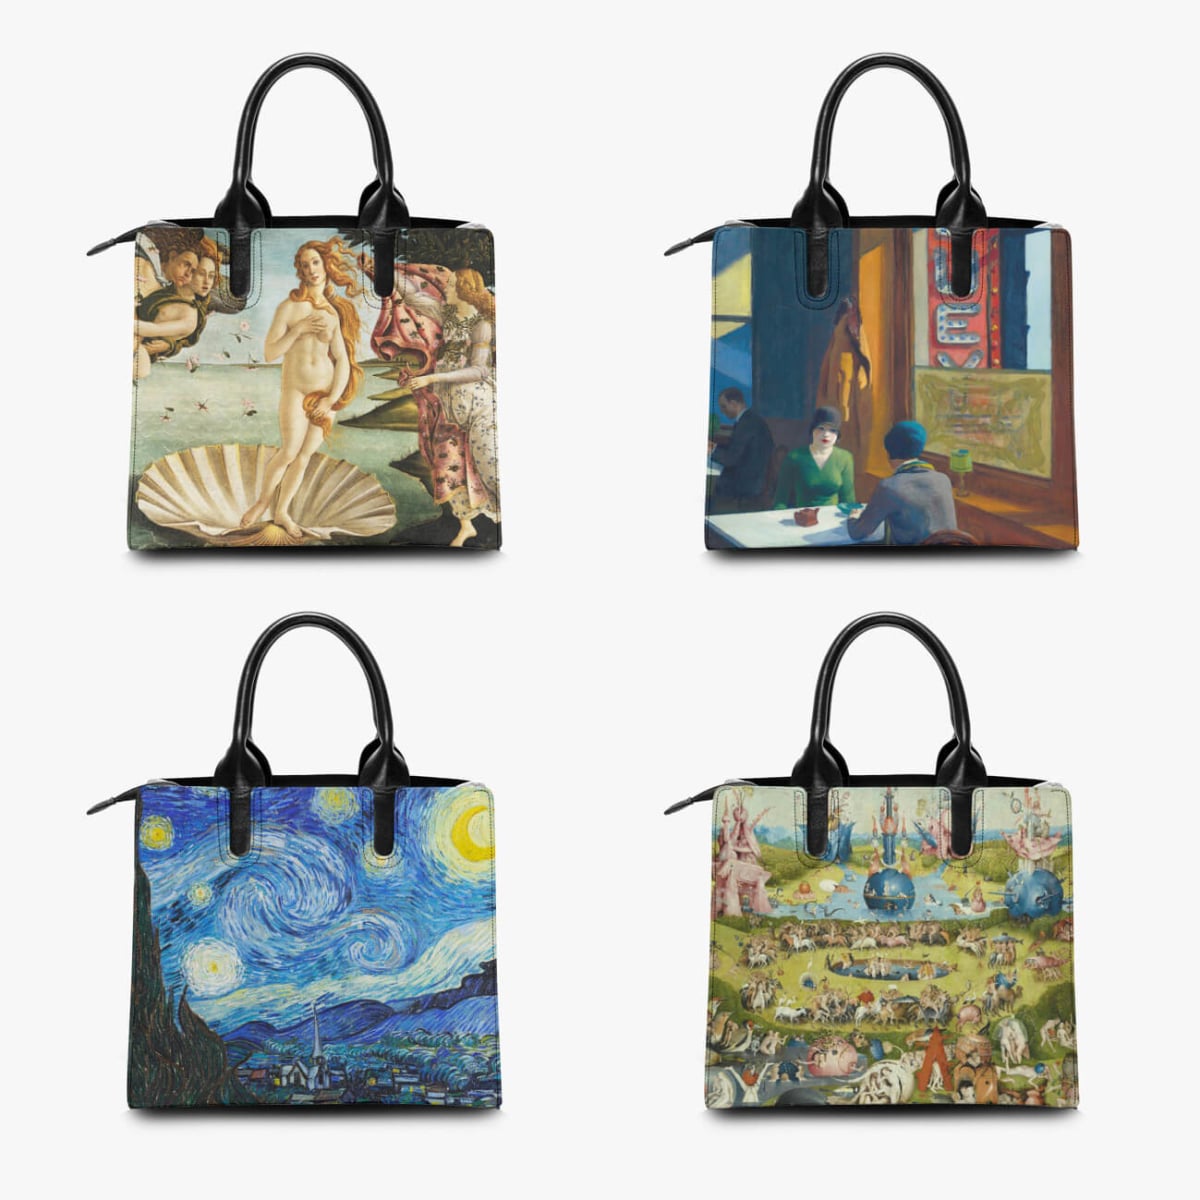 Henri Rousseau’s The Dream Painting Fashion Handbag